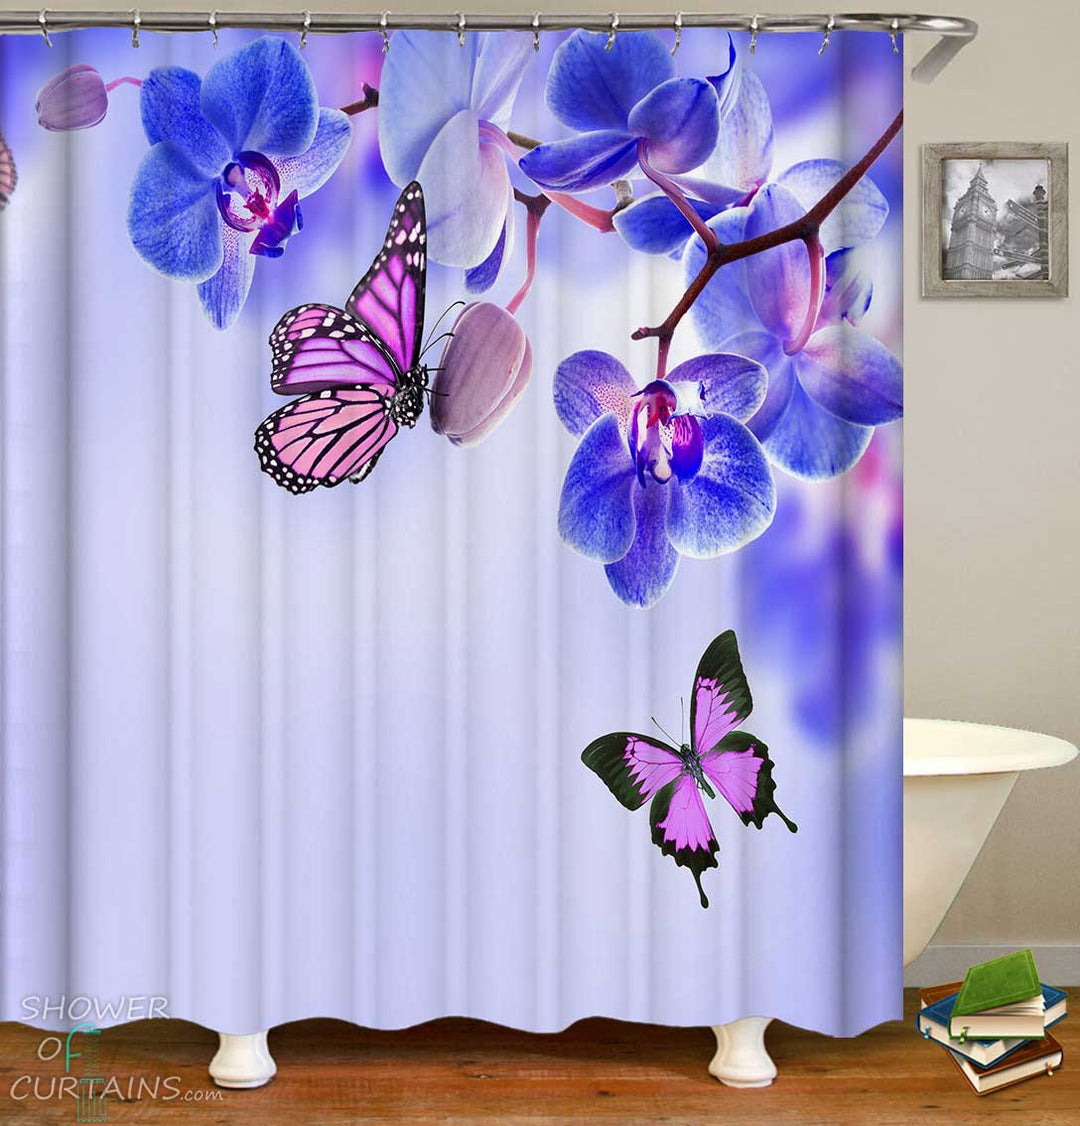 Shower Curtains with Purple Butterflies vs Blue Flowers 